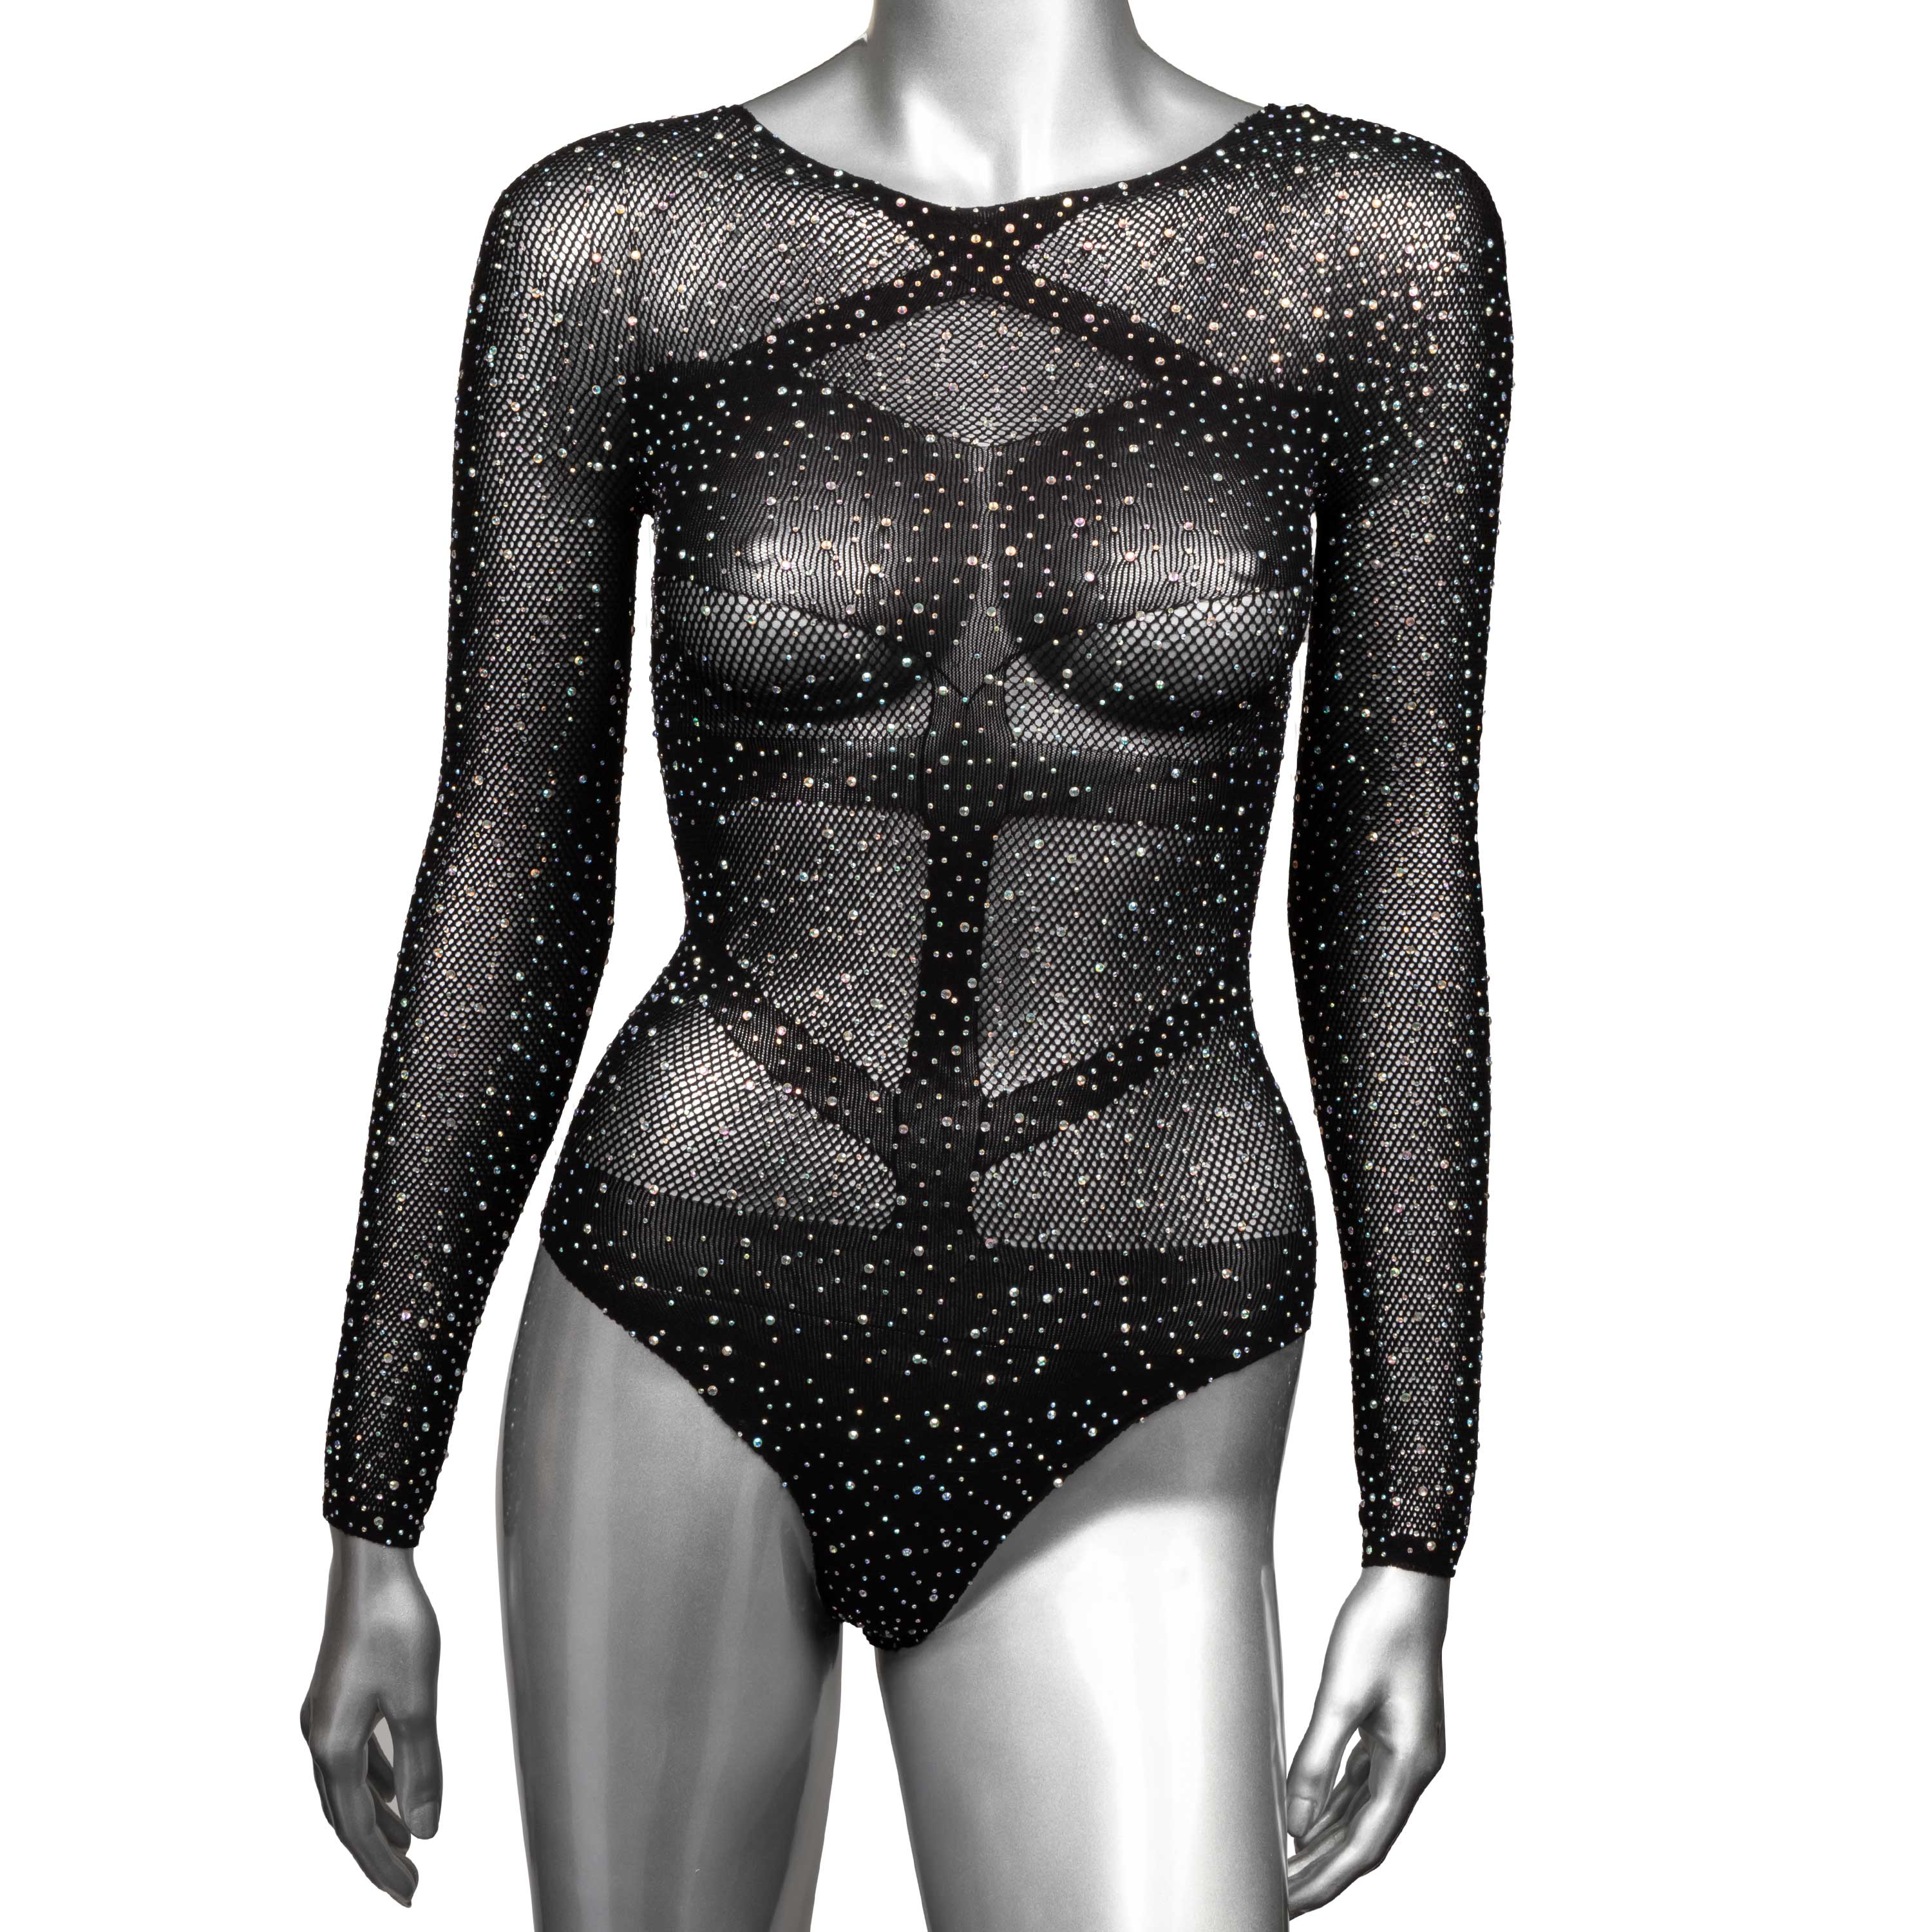 Radiance Long Sleeve Body Suit - One Size - Black-6